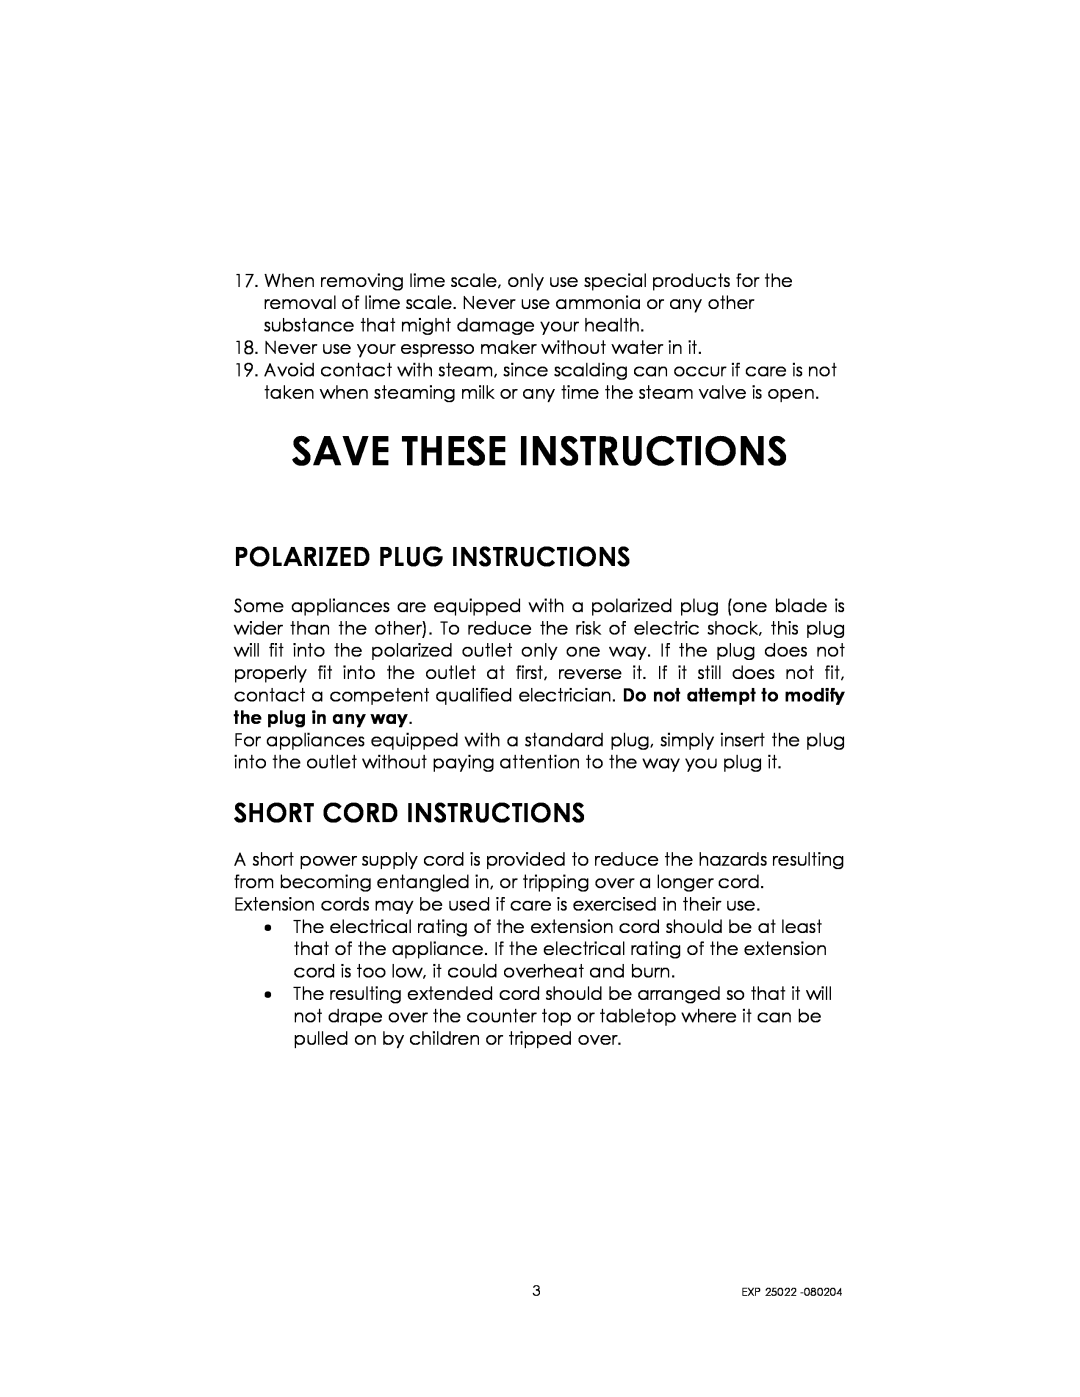 Kalorik EXP 25022 manual Save These Instructions, Polarized Plug Instructions, Short Cord Instructions 